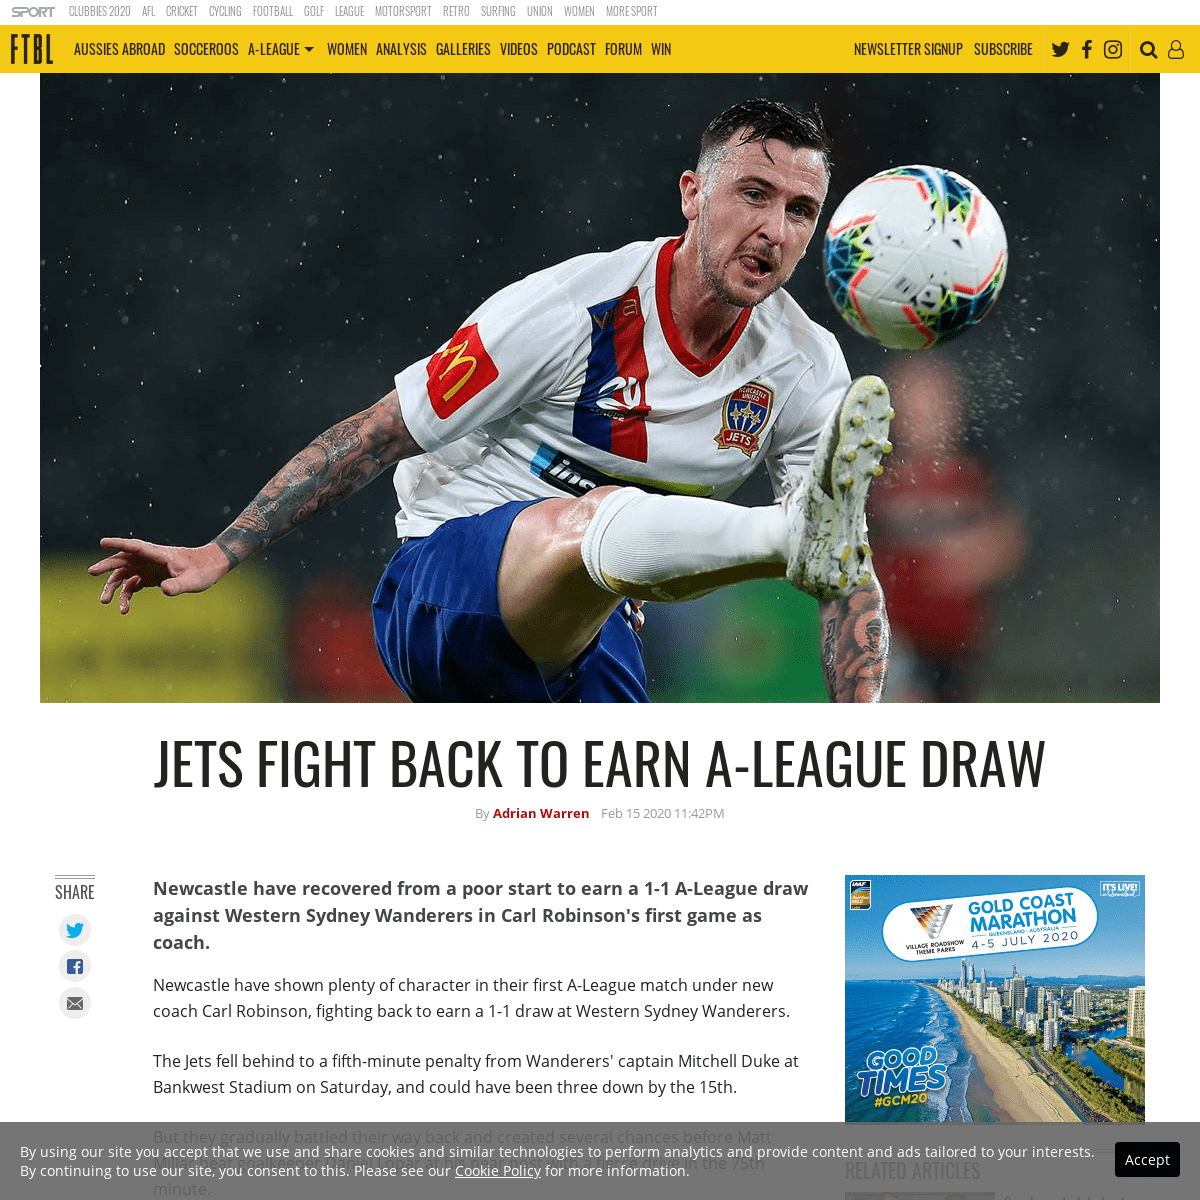 A complete backup of www.ftbl.com.au/news/jets-fight-back-to-earn-a-league-draw-538043